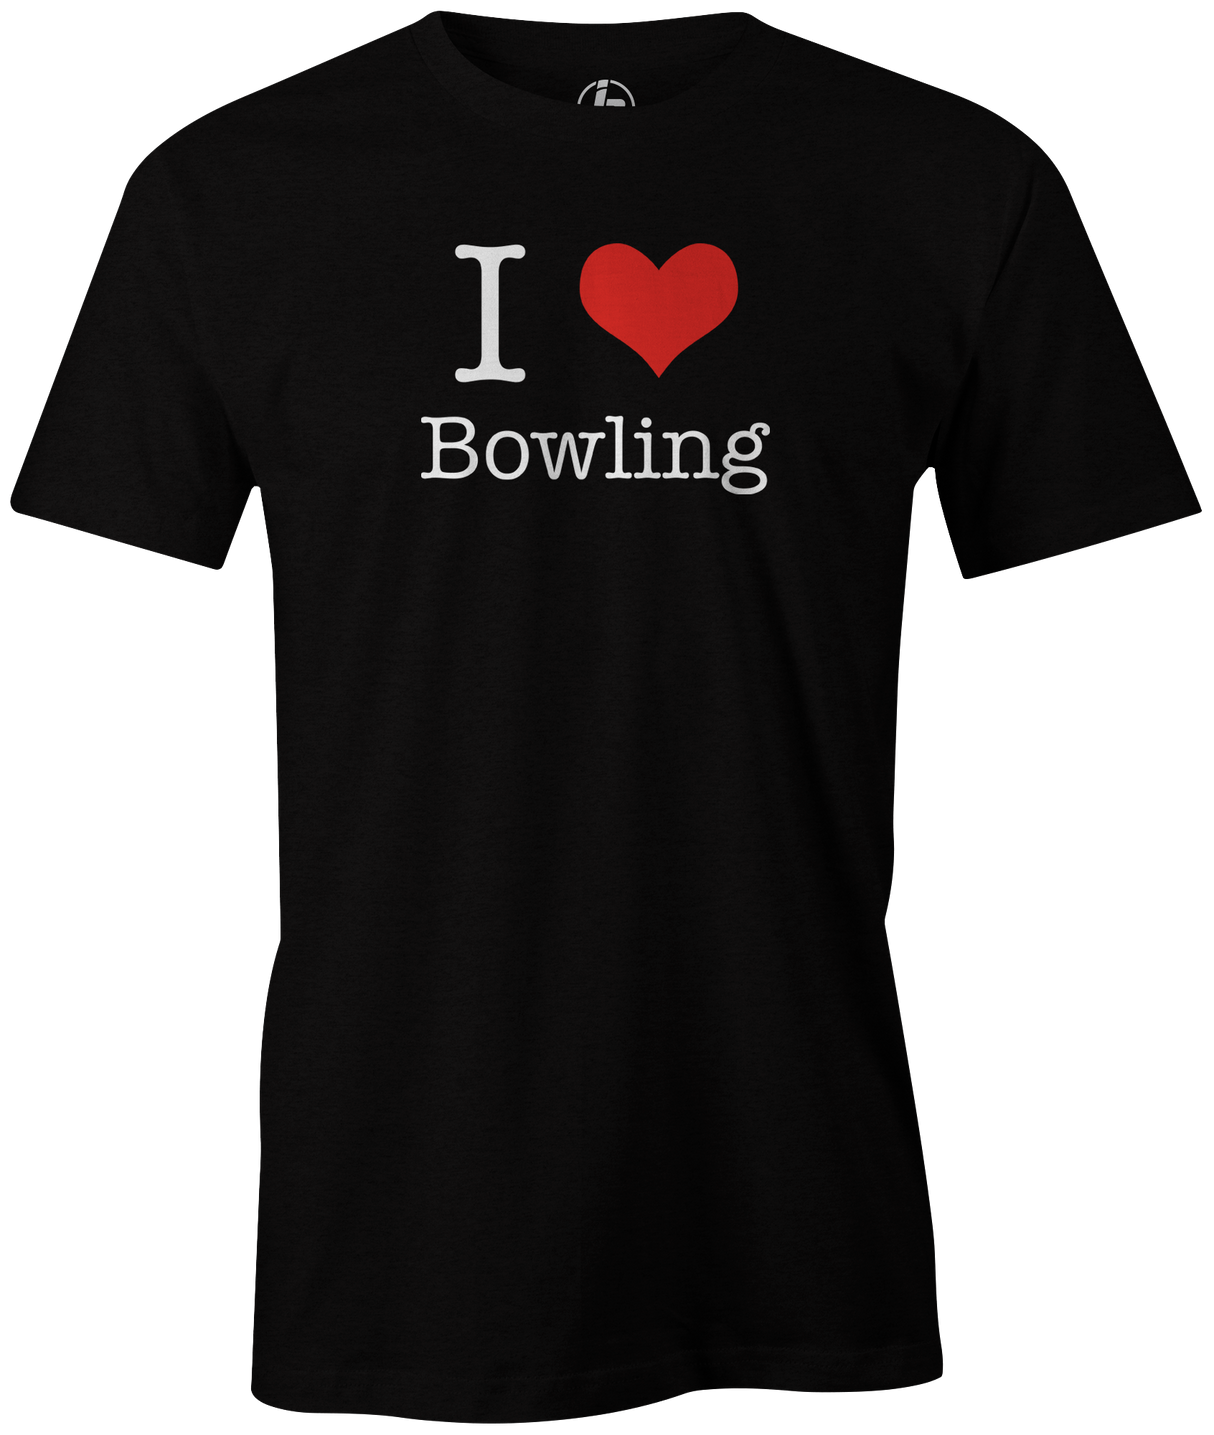 I love bowling Men's bowling shirt, black, t-shirt, tees, tee-shirt, tee, cool, novelty, pba, pwba, usbc, free shipping, discount.